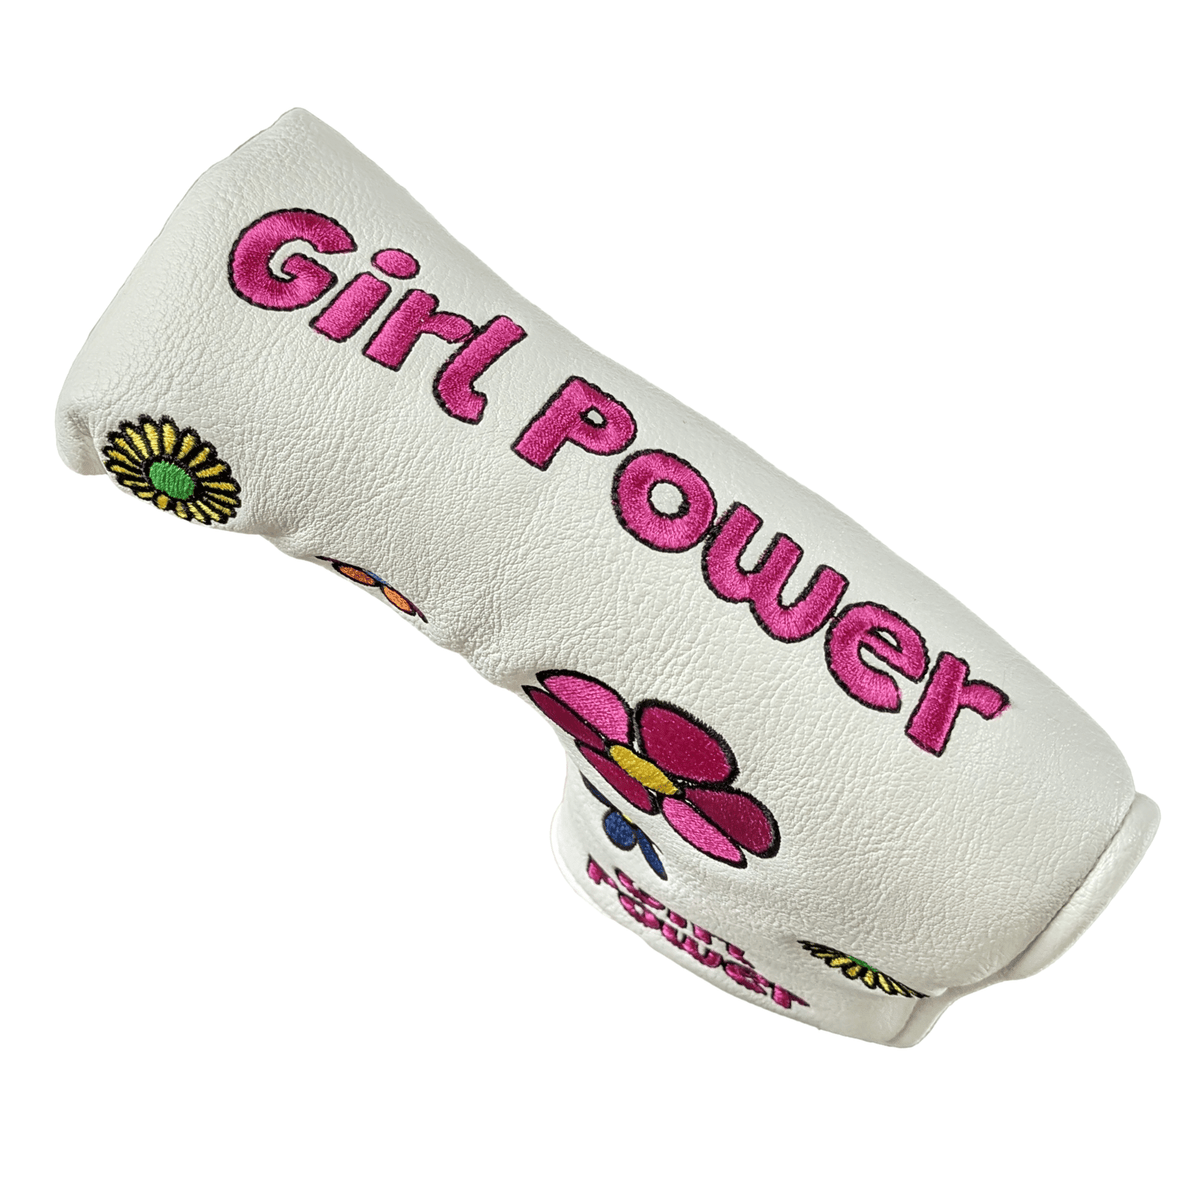 Girl Power - BLADE Putter Headcover